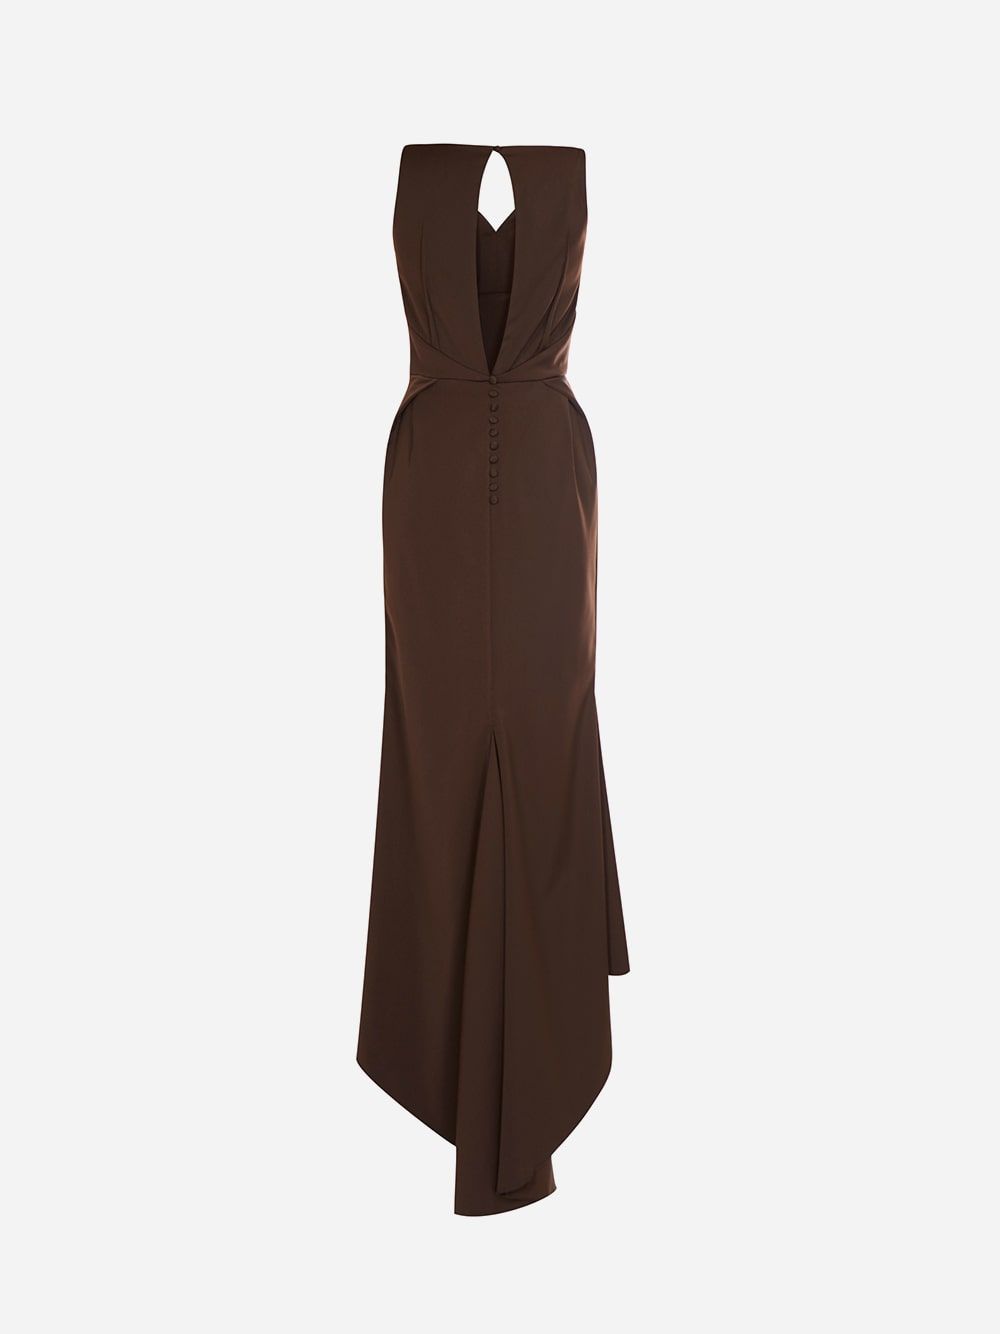 Brown Asymmetric Dress | Diogo Miranda